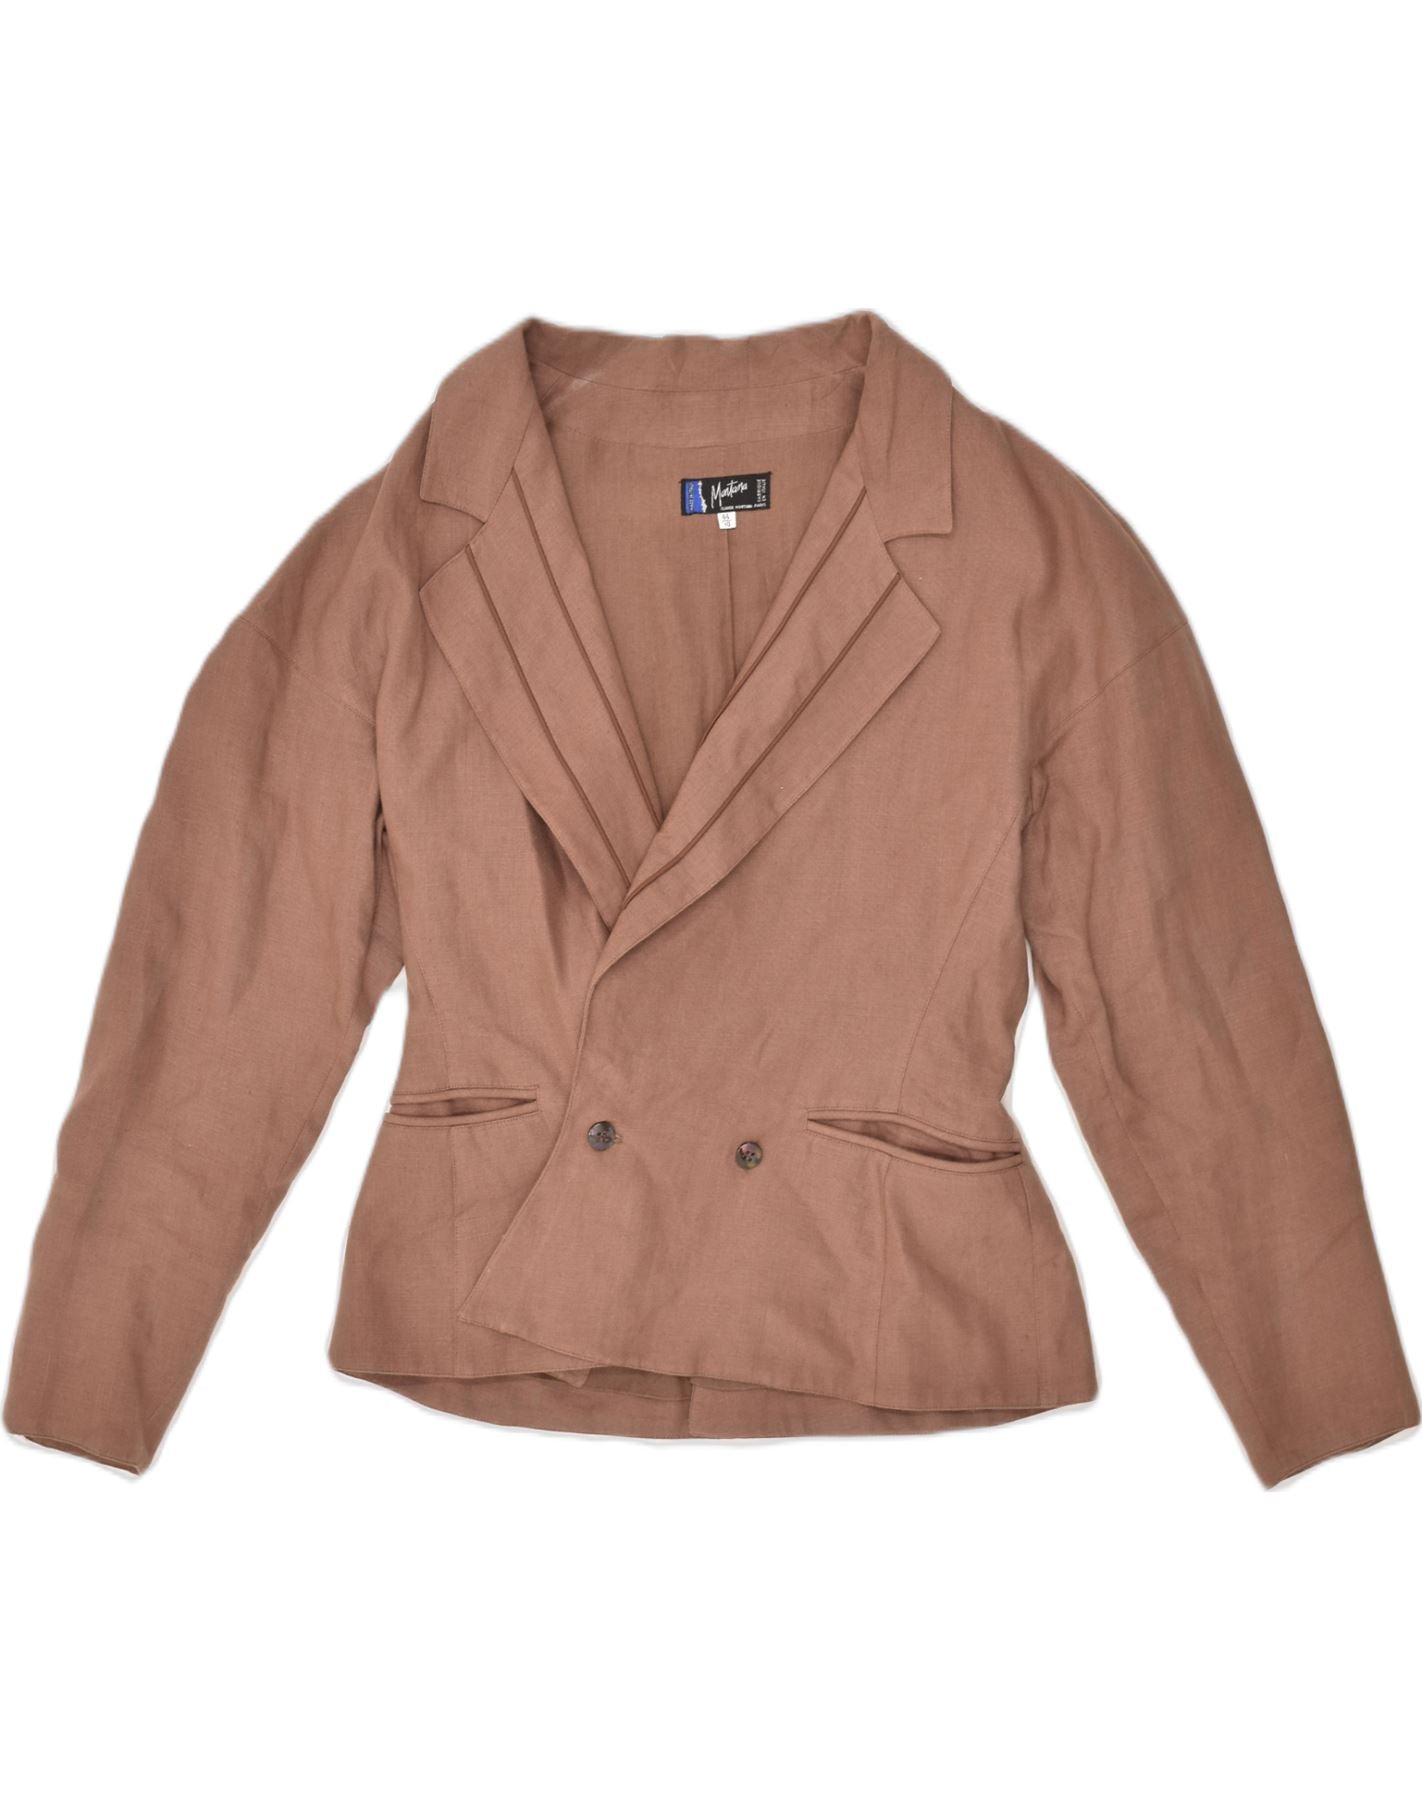 CLAUDE MONTANA Womens Double Breasted Blazer Jacket EU 44 XL Brown